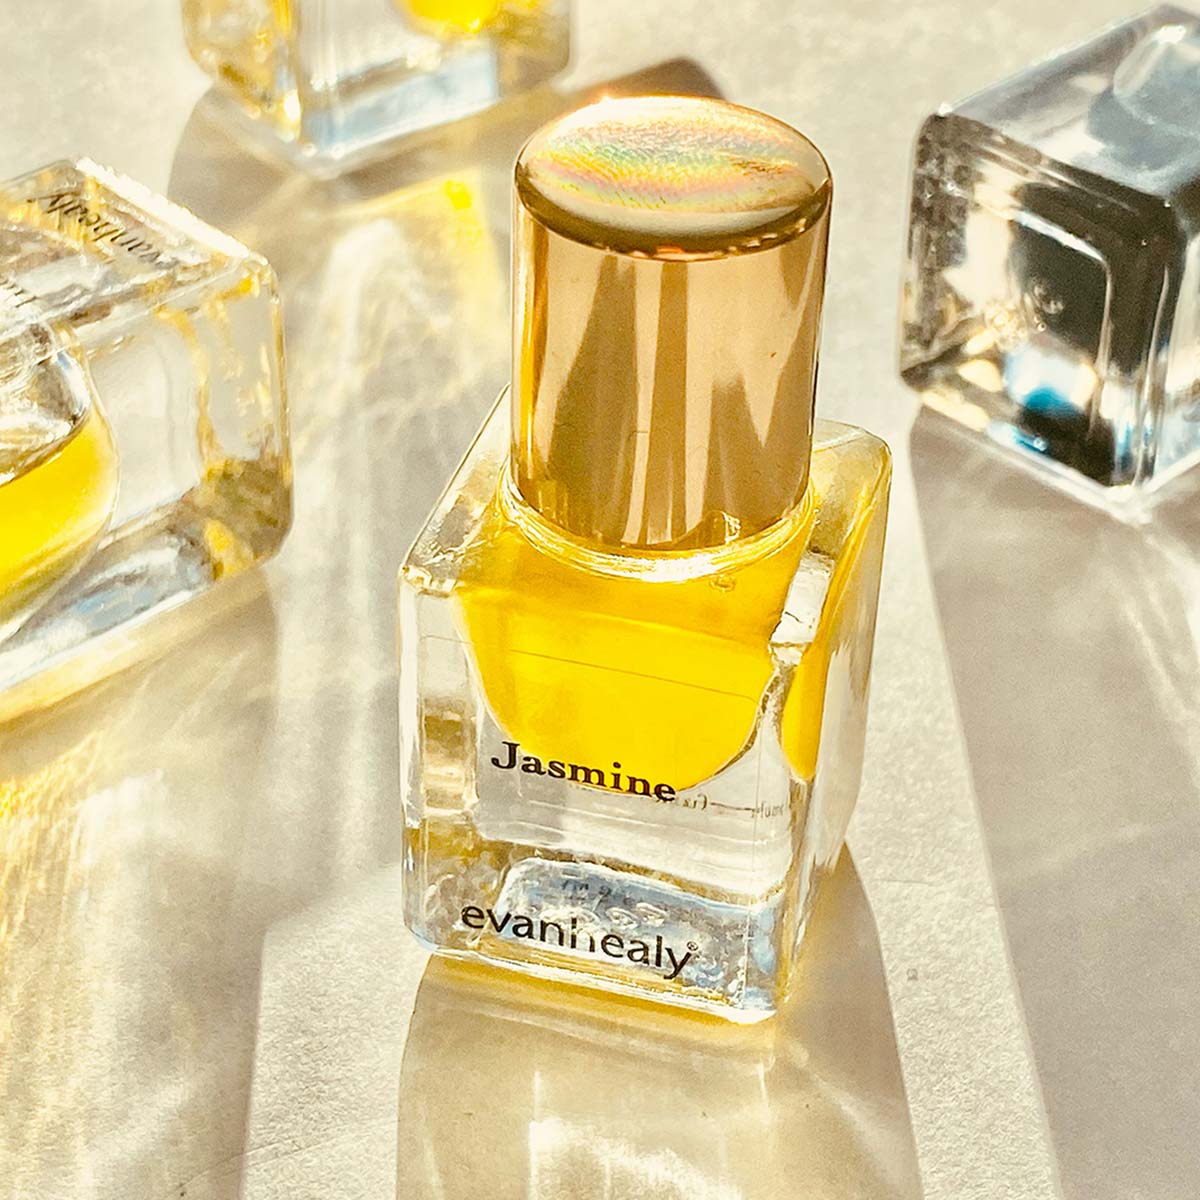 evanhealy jasmine perfume in glass jar with gold cap